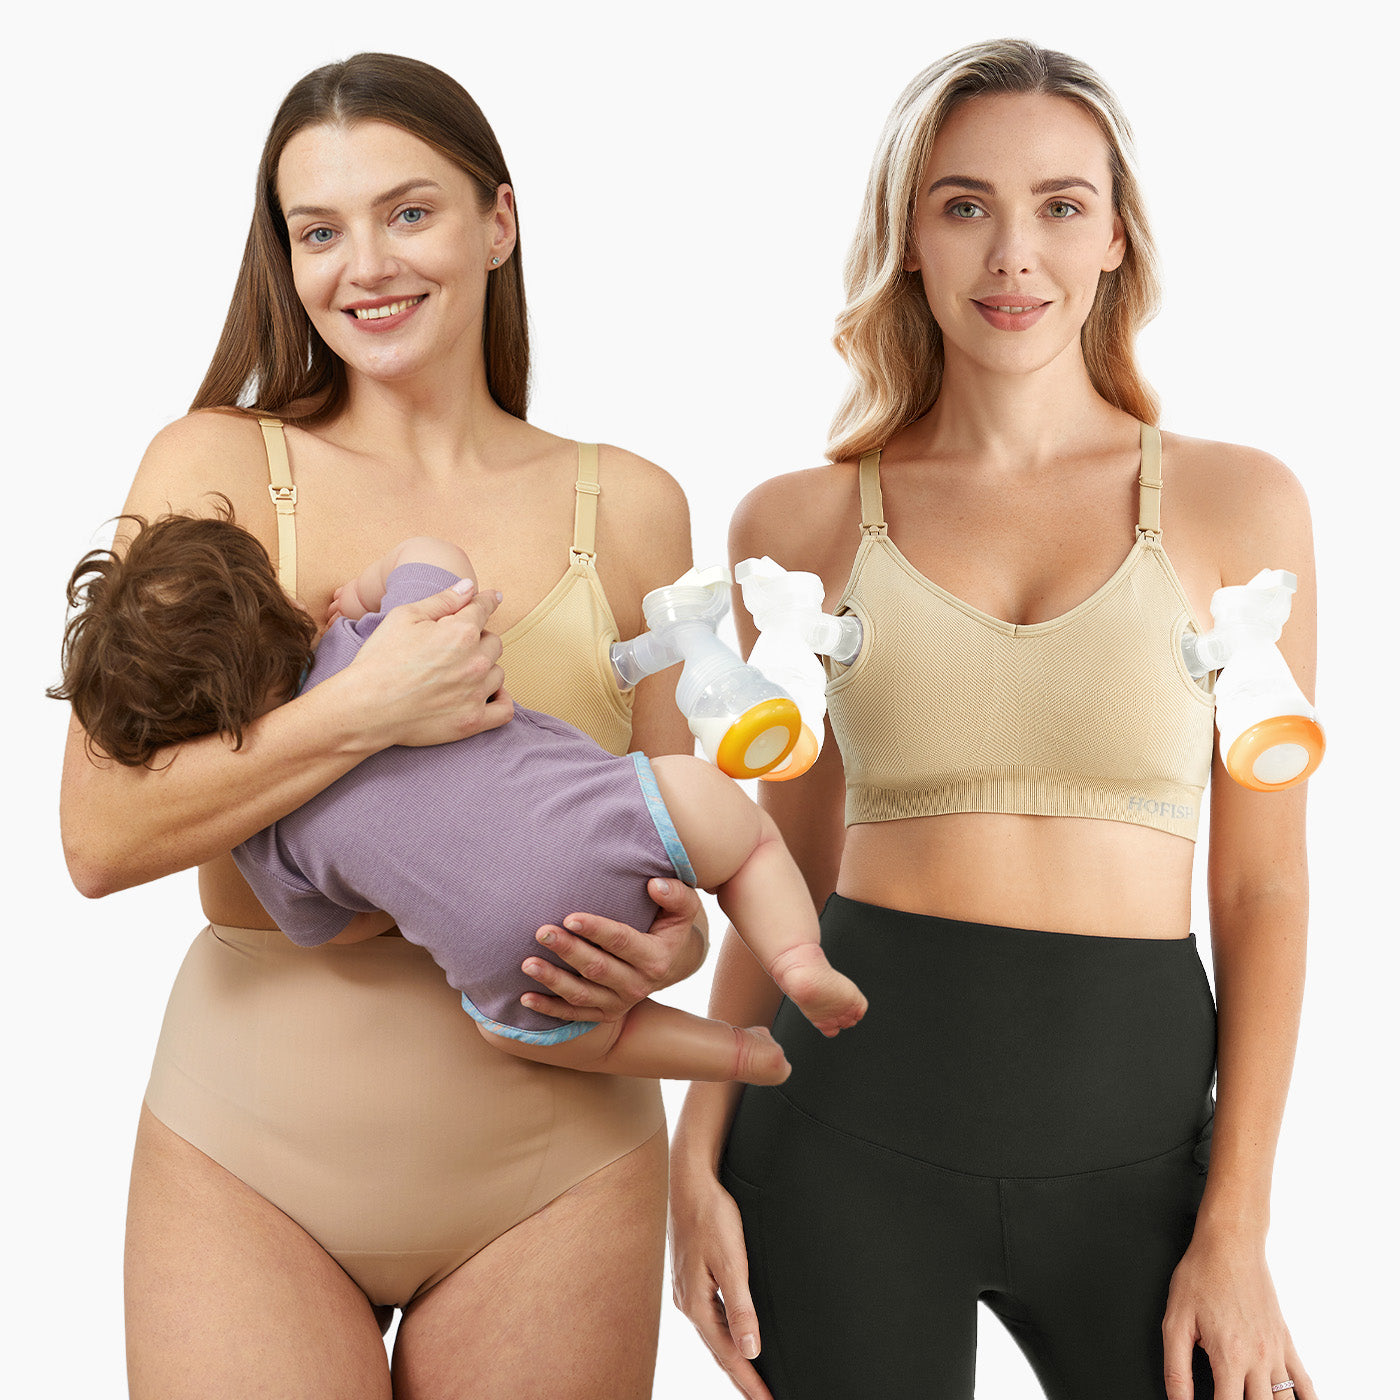 HOFISH Womens Maternity Nursing Top Breastfeeding Tank Top Tee Shirt  Pregnancy 810031302871